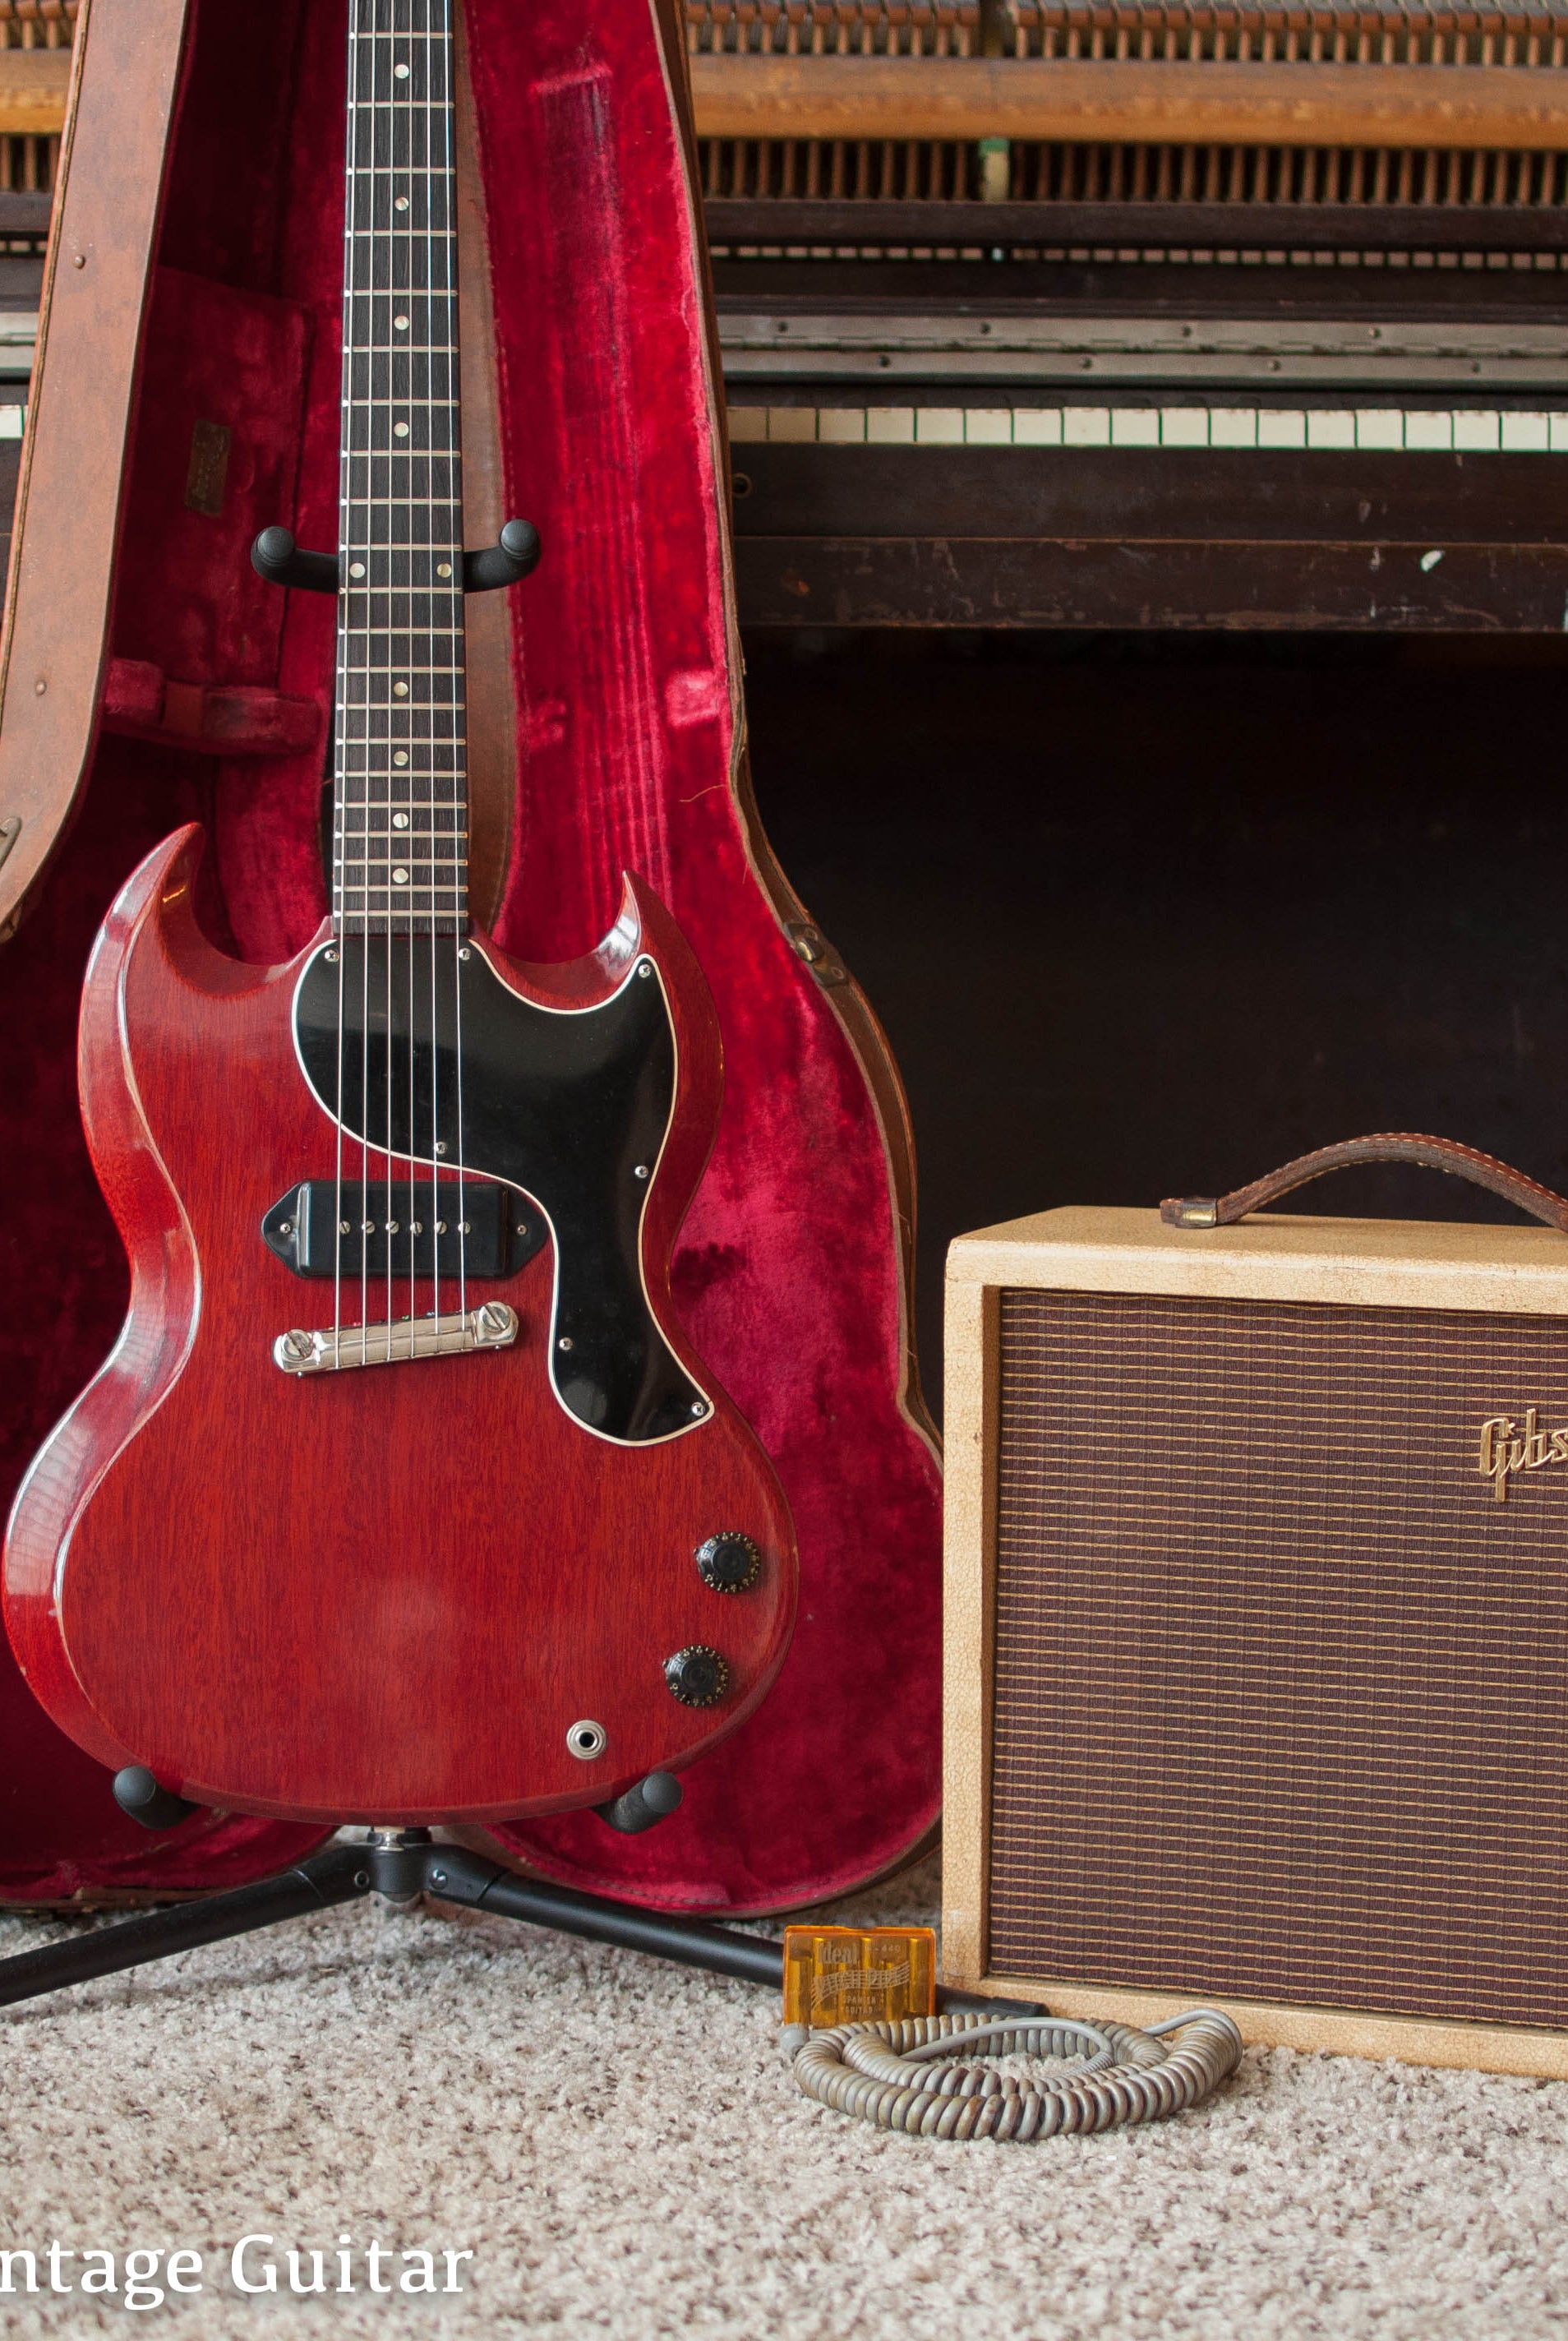 Vintage 1961 Gibson Les Paul Junior electric guitar